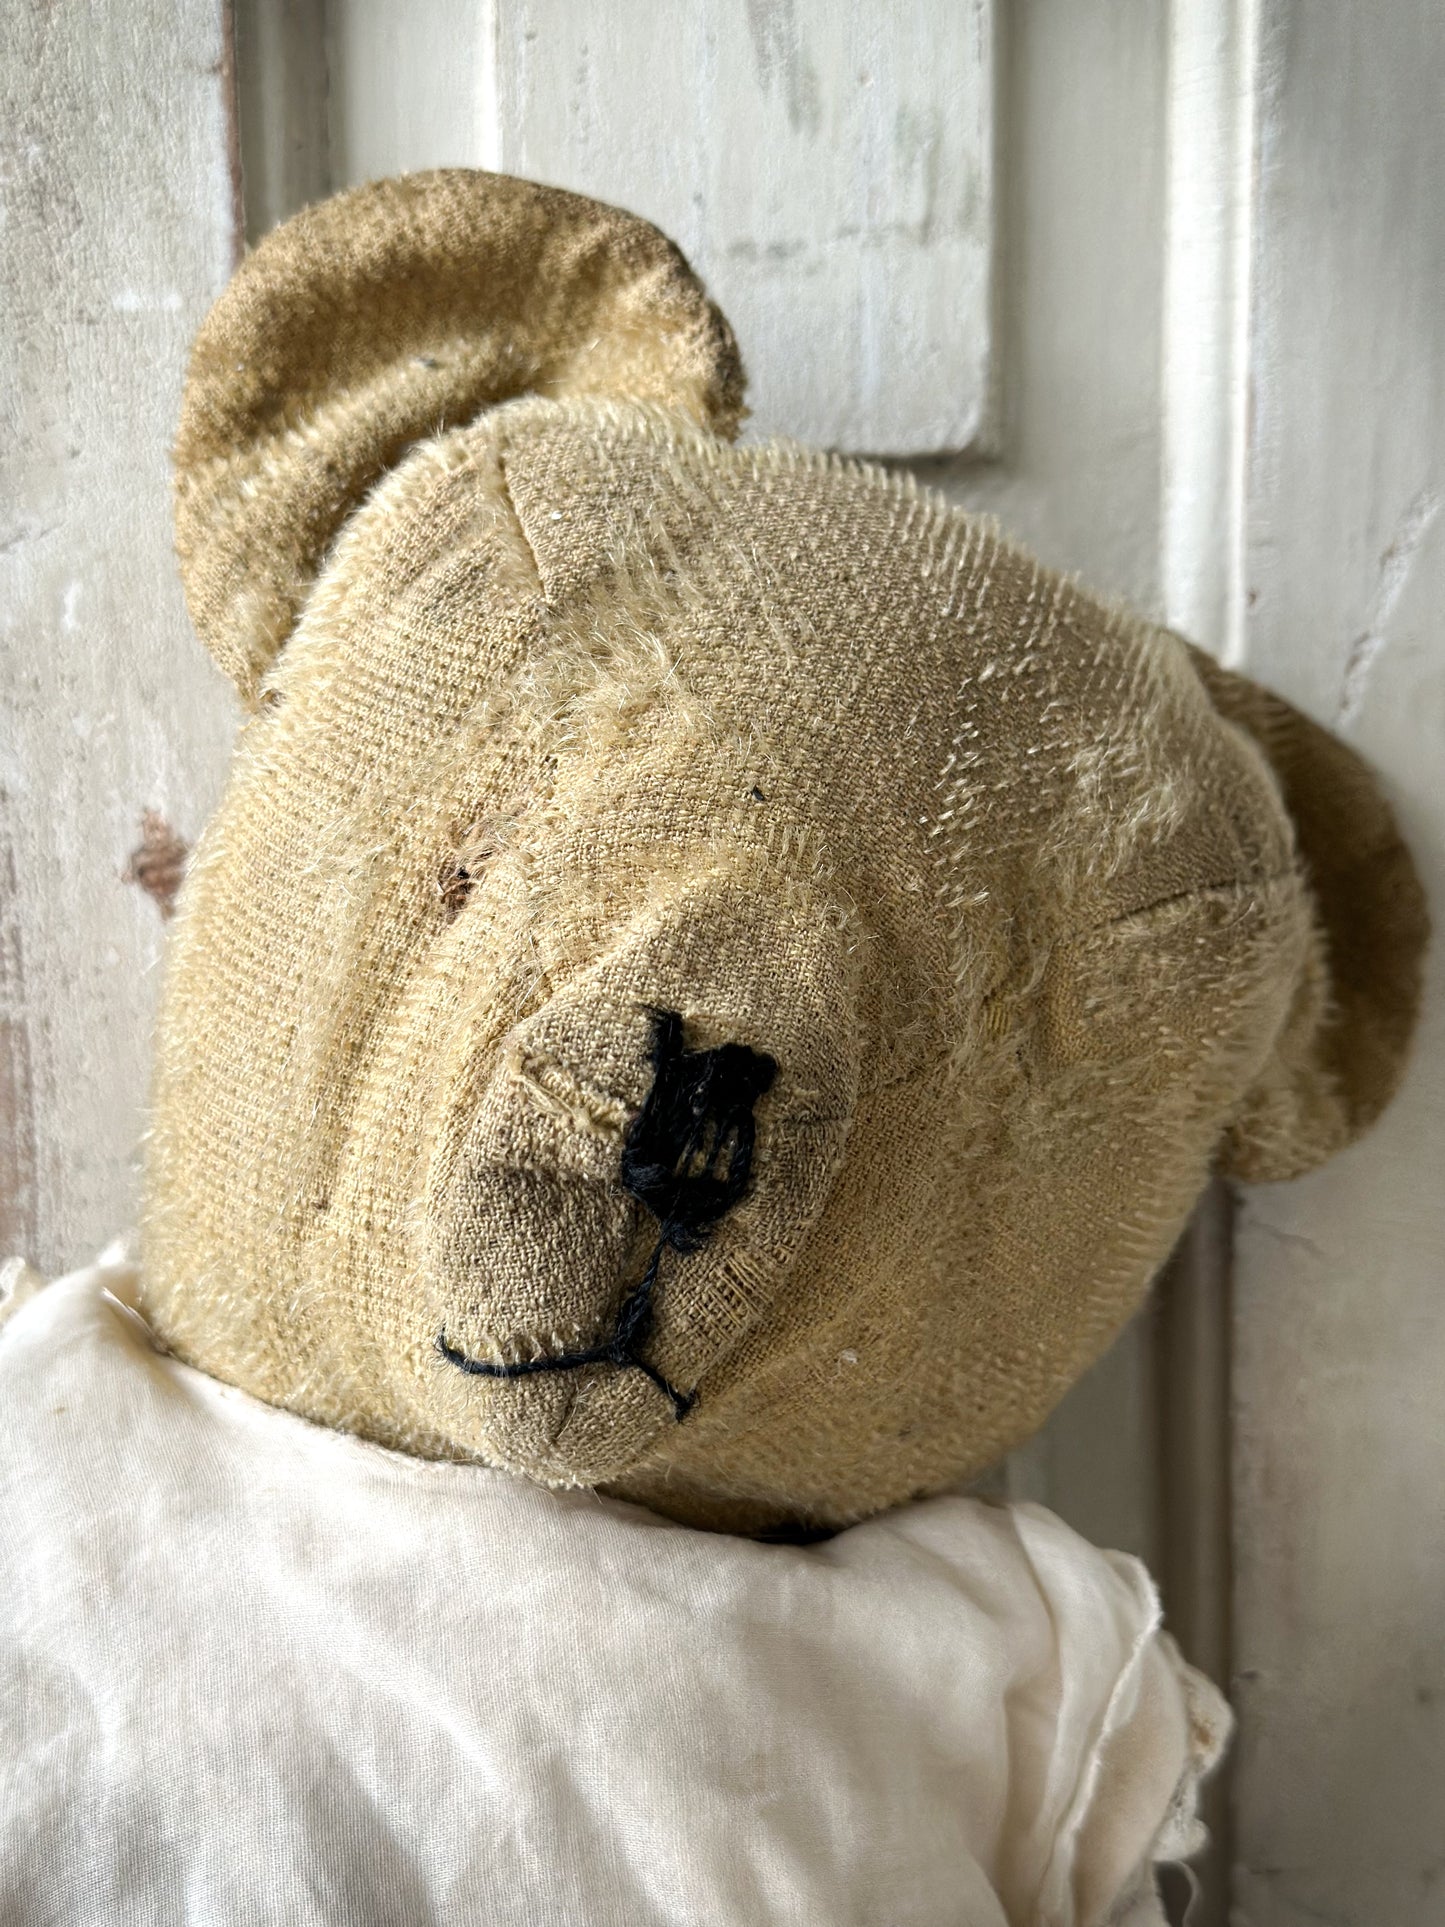 A wonderful well loved antique French teddy bear